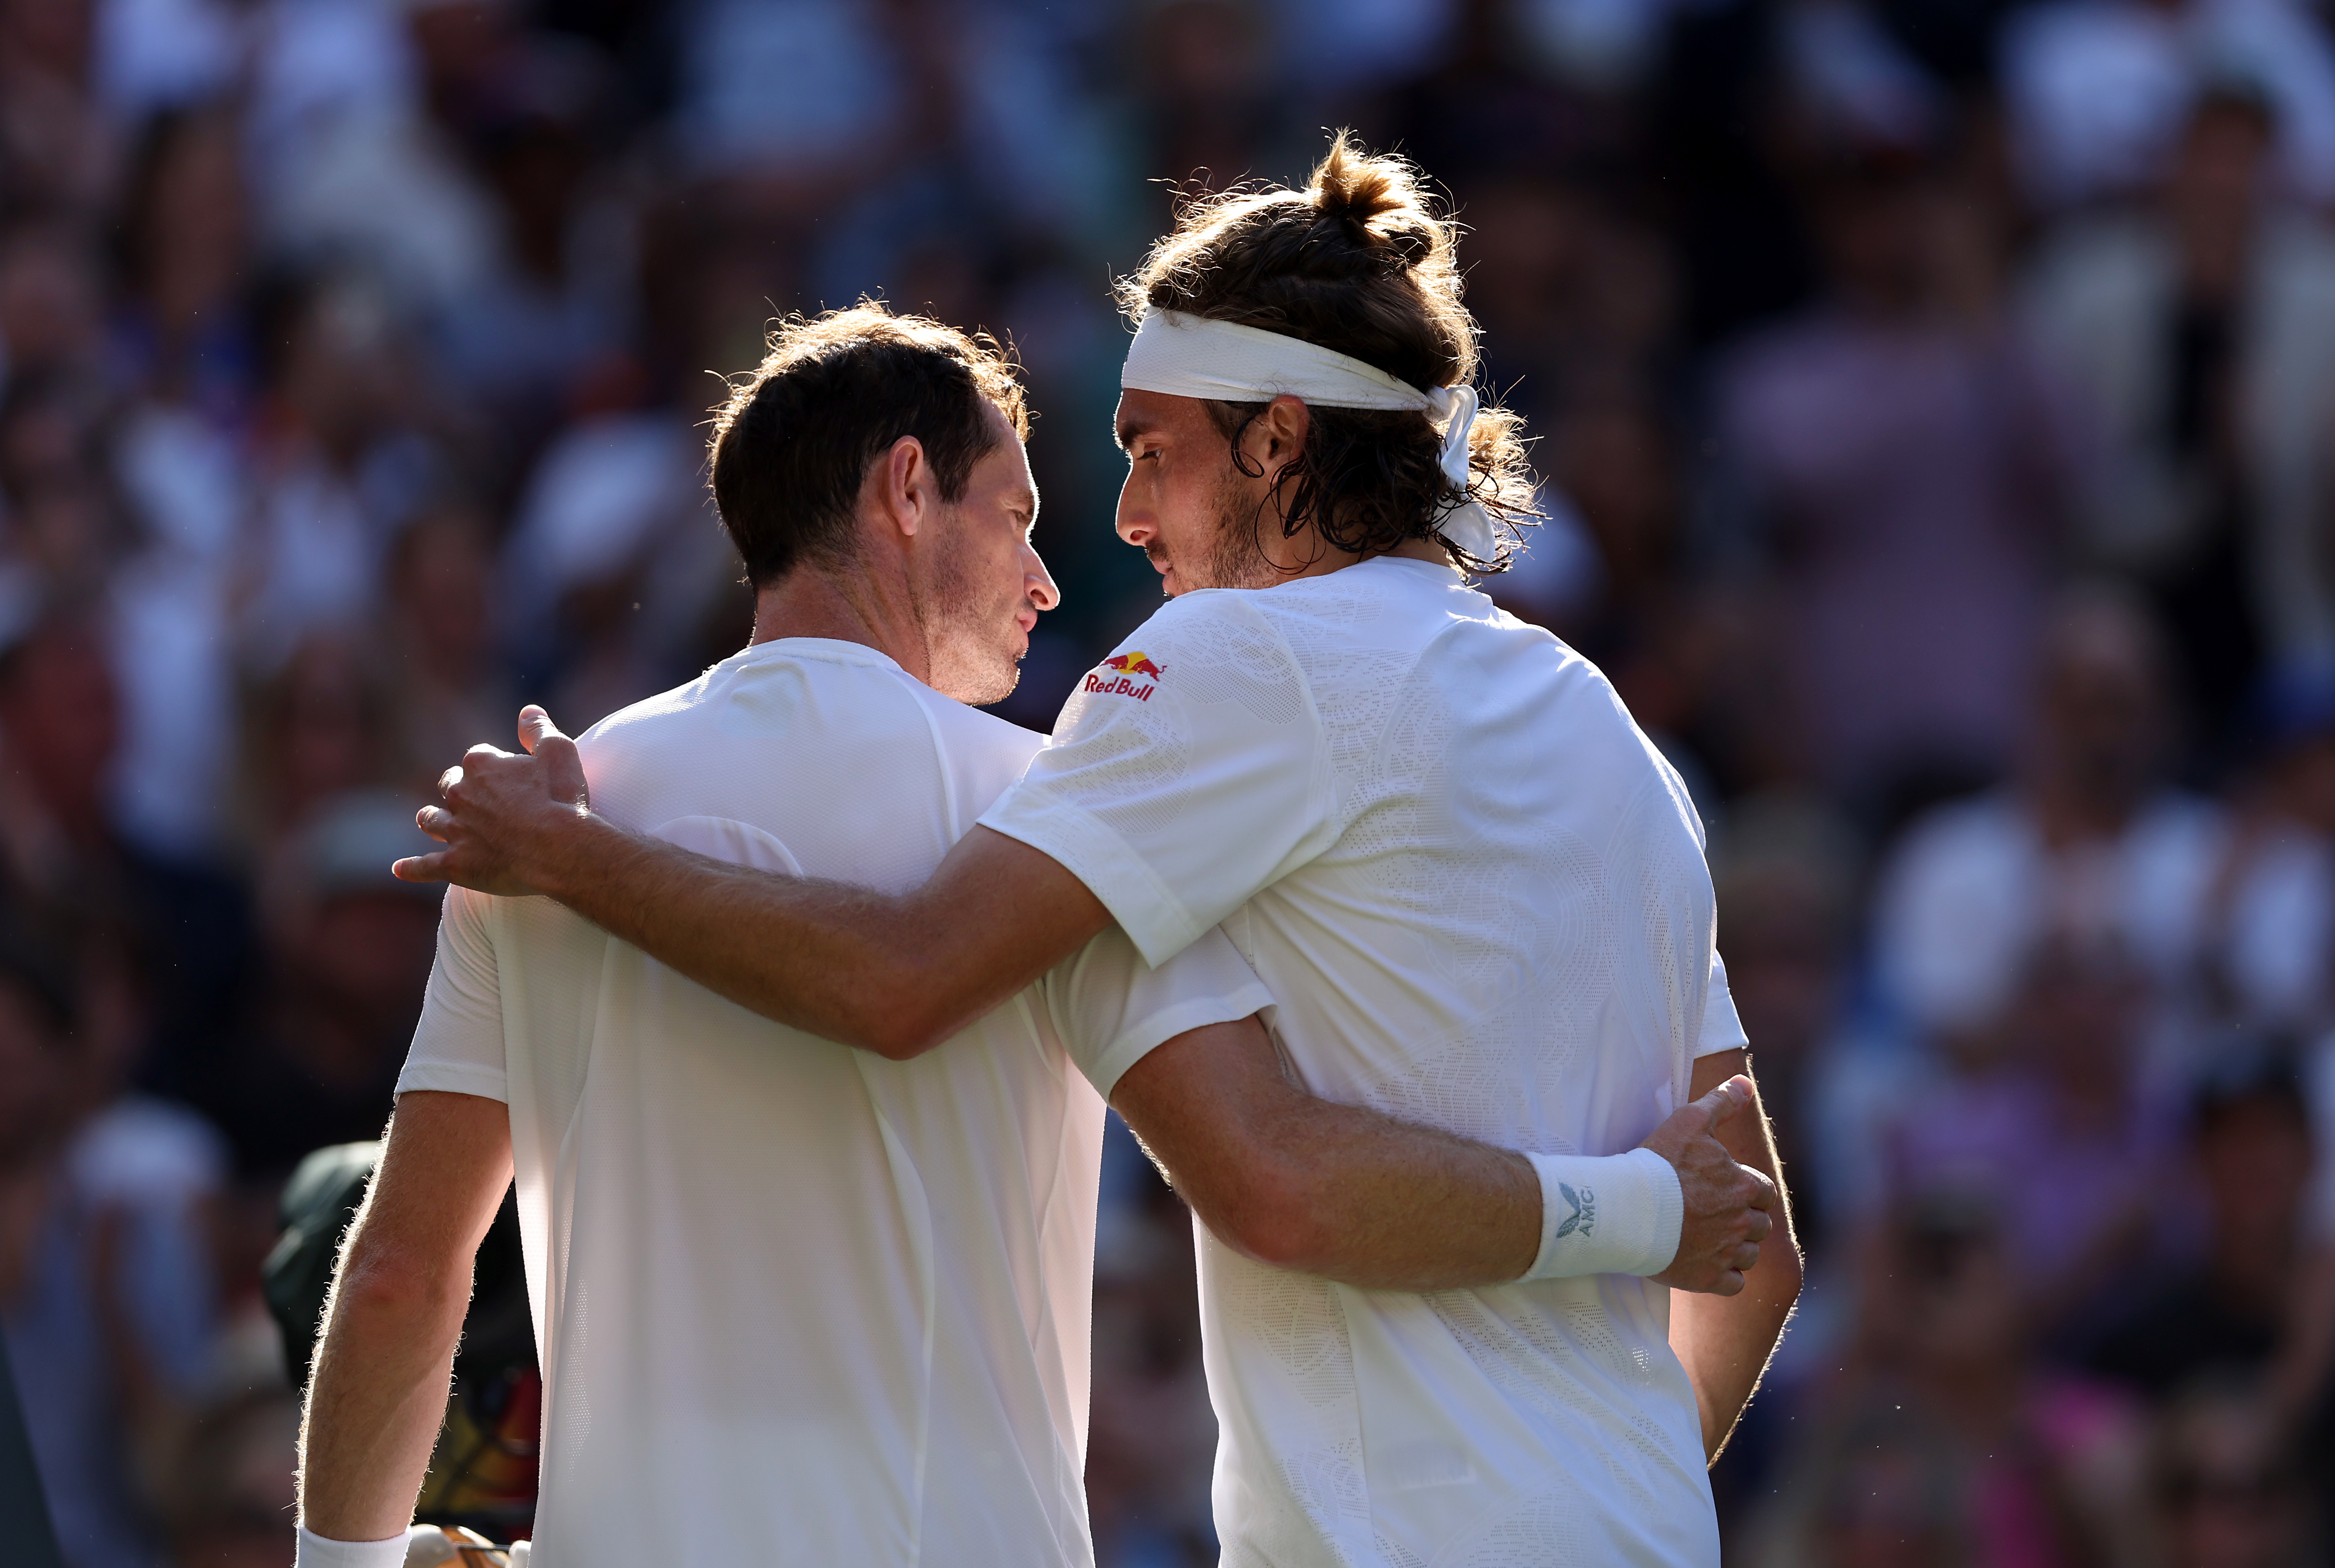 Andy Murray, left, and Stefanos Tsitsipas embrace after their match at Wimbledon